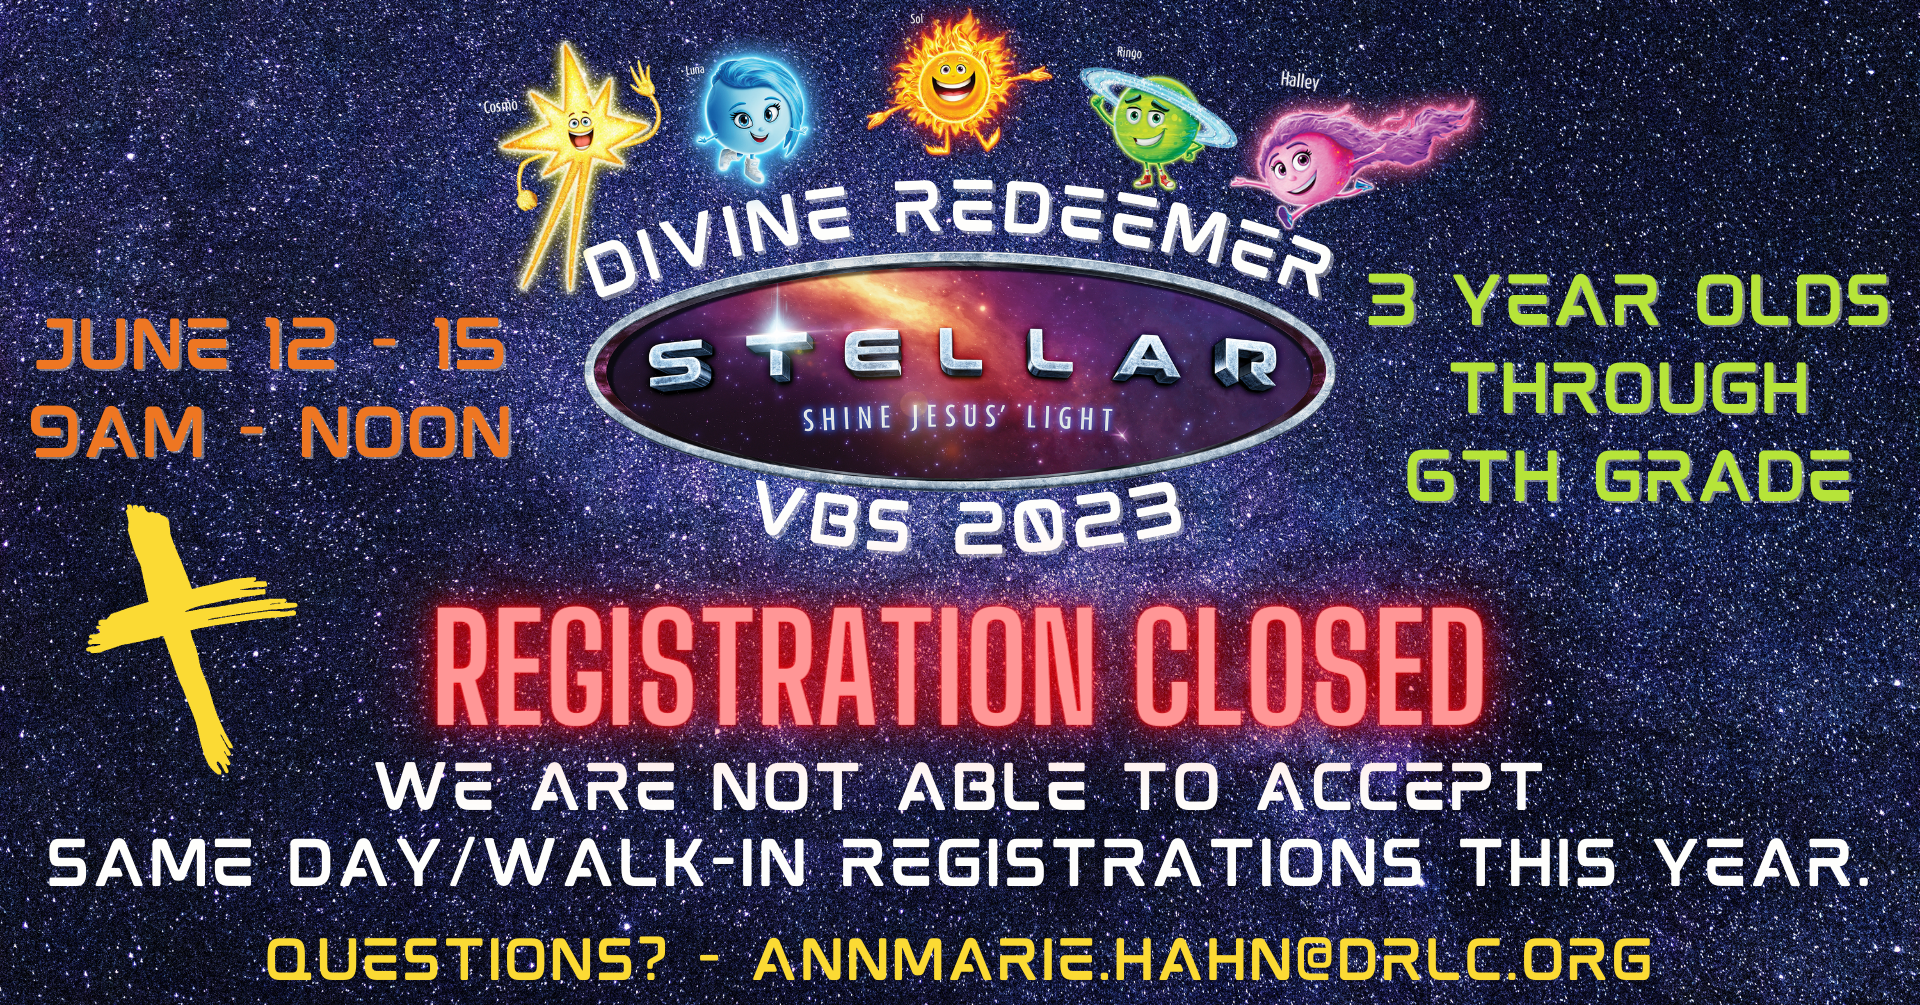 VBS Registration Closed